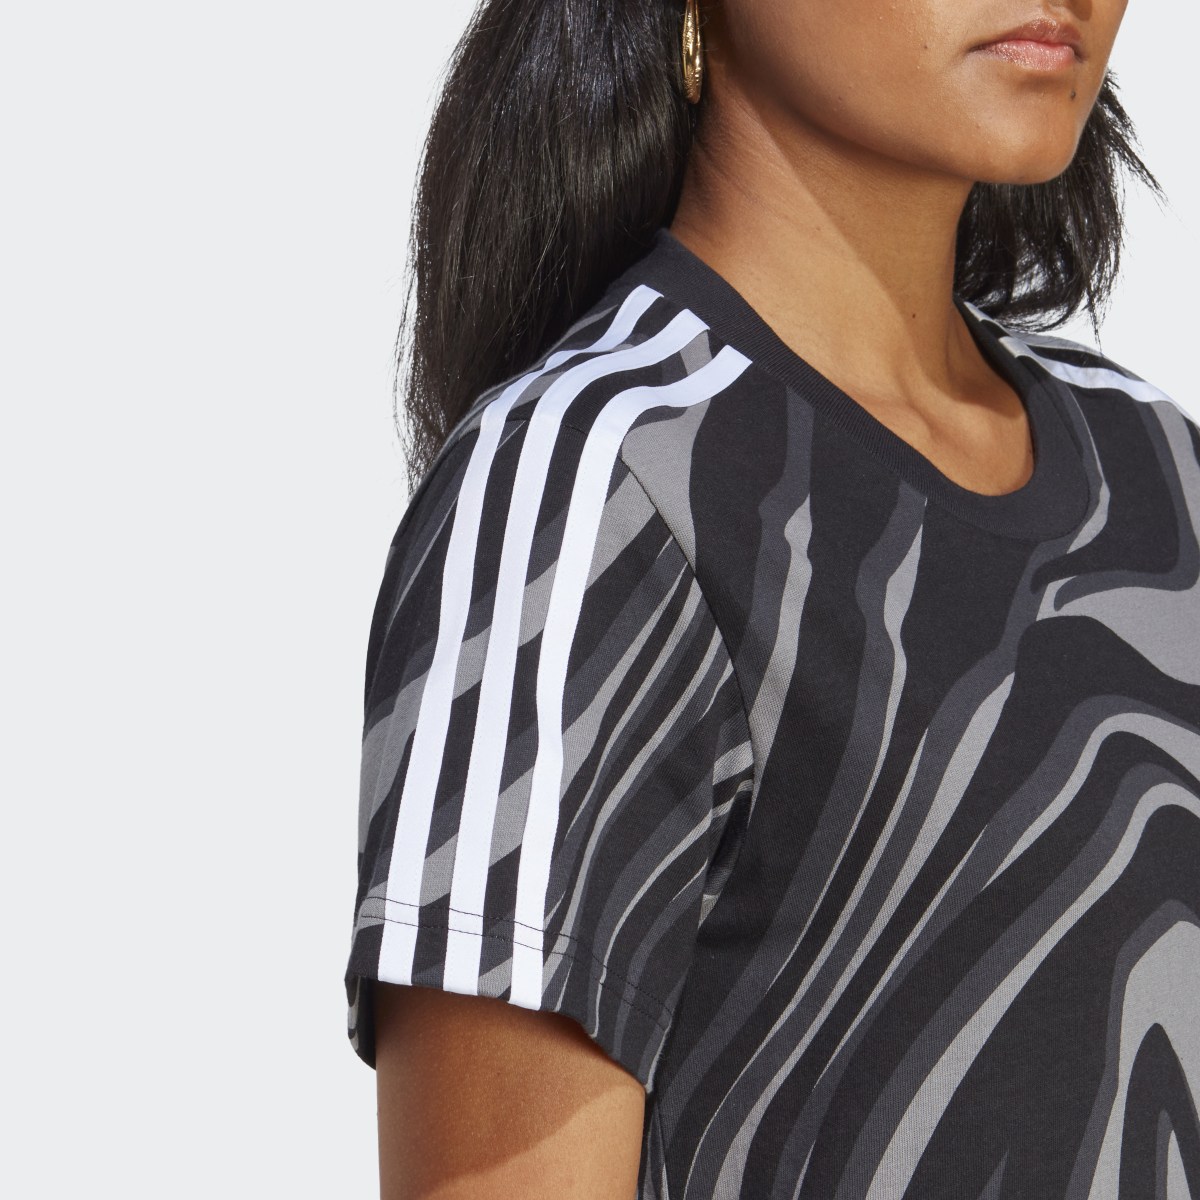 Adidas Camiseta Abstract Allover Animal Print. 7